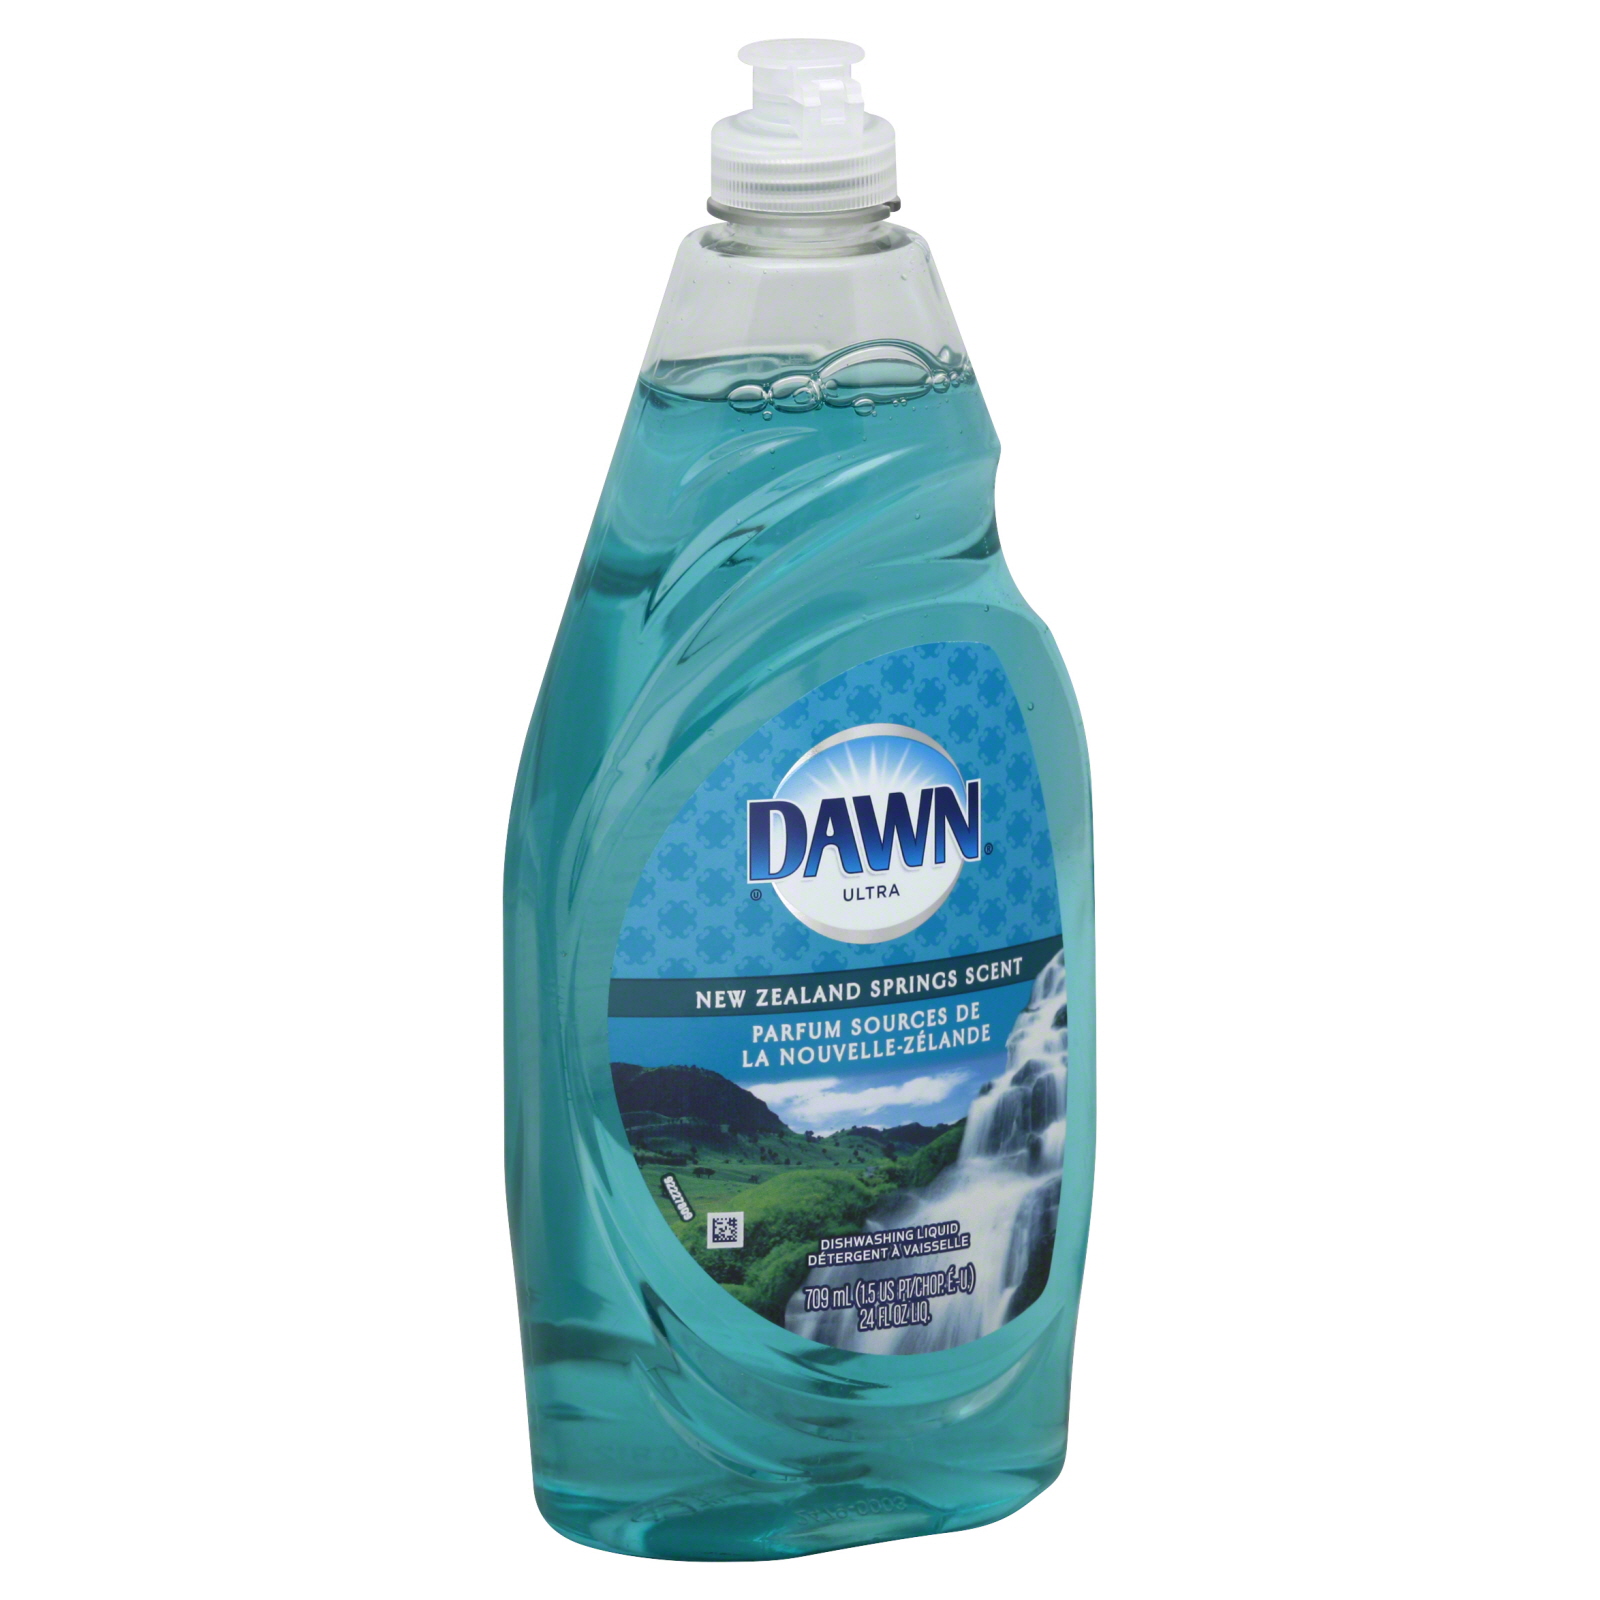 Dawn Ultra New Zealand Spring Liquid Dish Detergent 24 oz